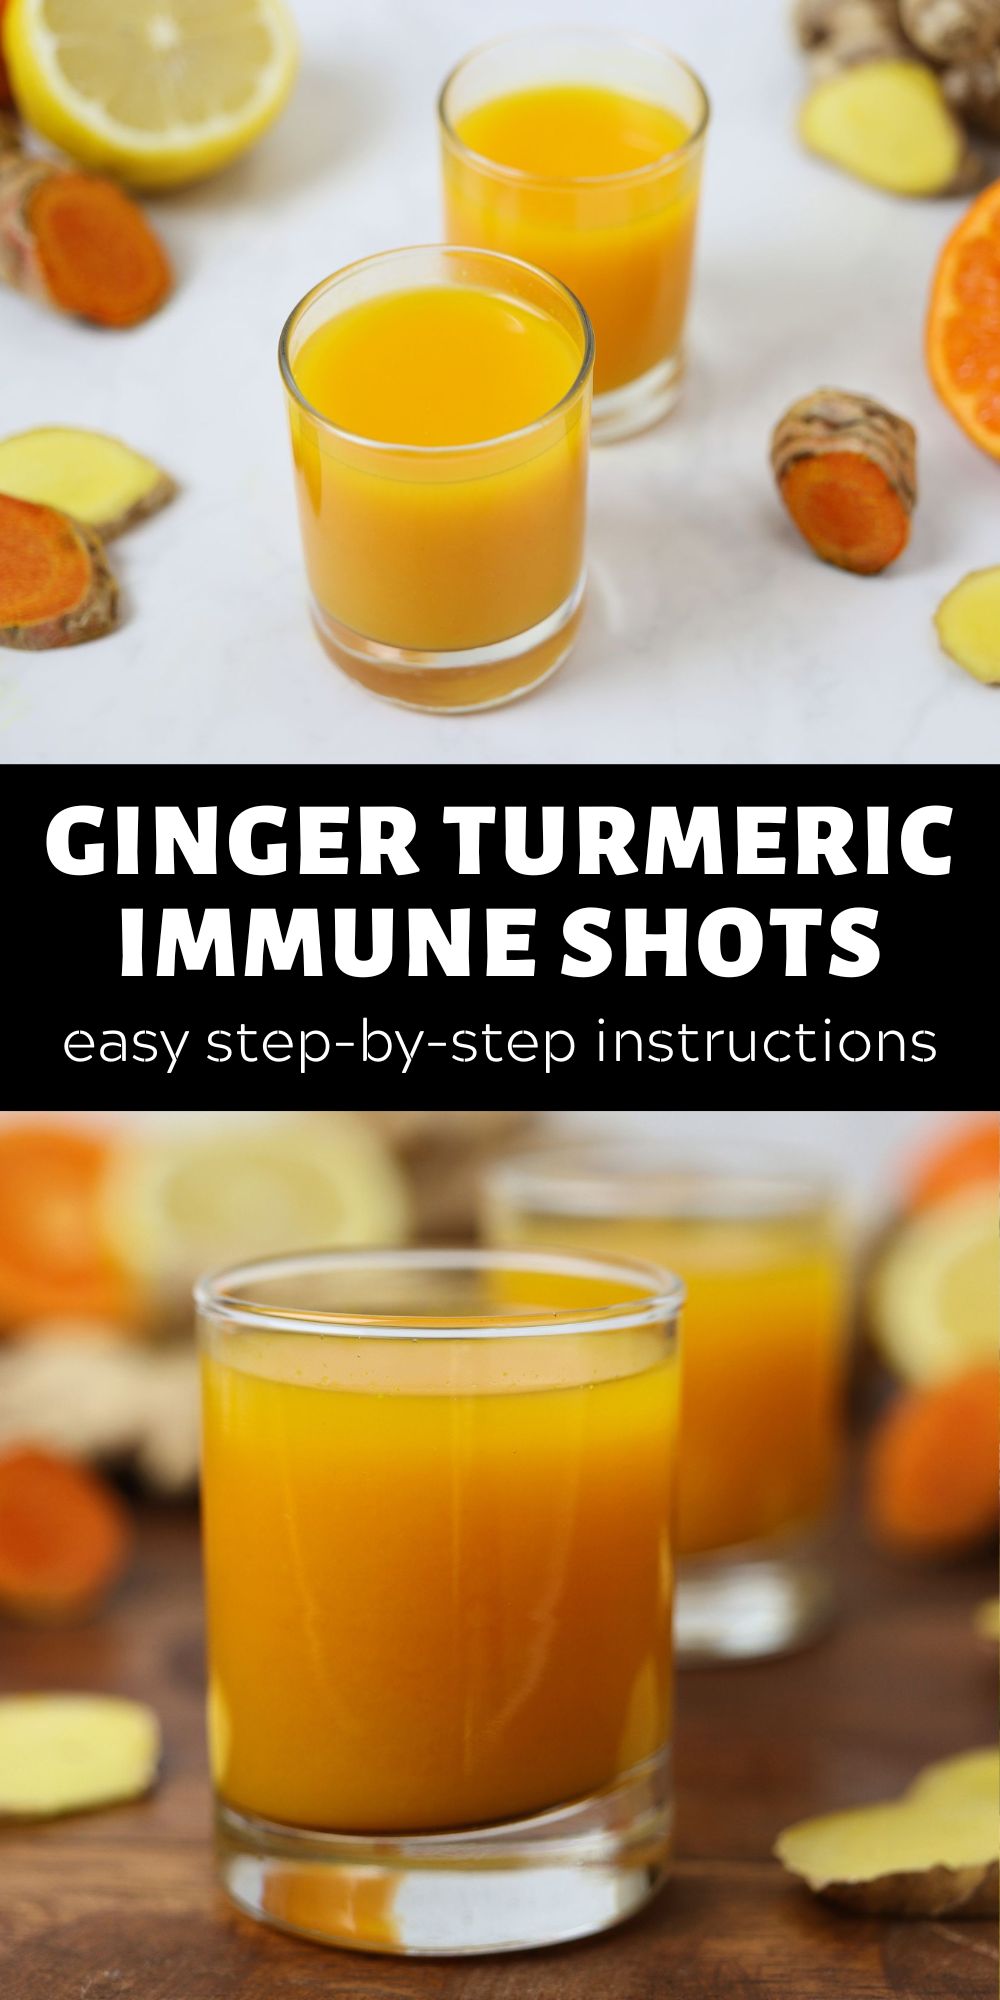 Pin image for ginger turmeric immune shots